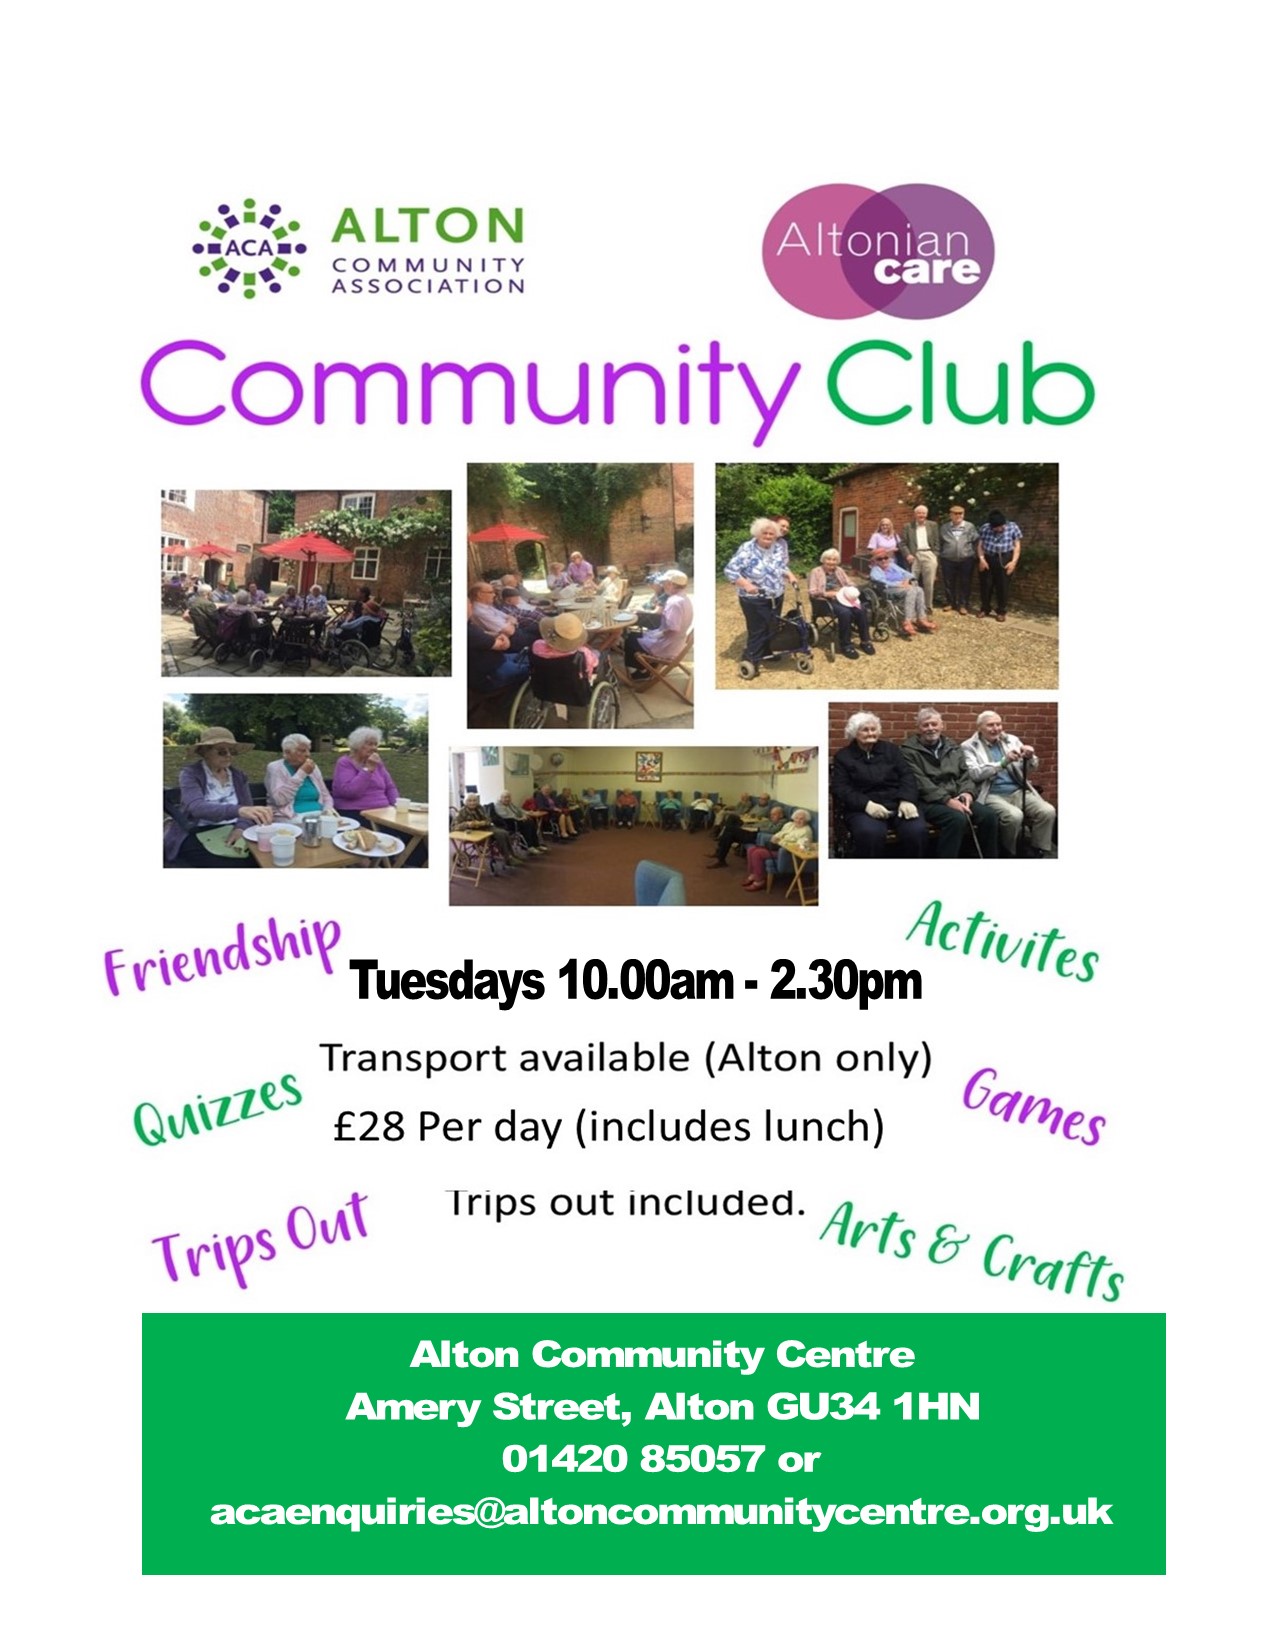 Alton Community Centre Day Centre Community Club